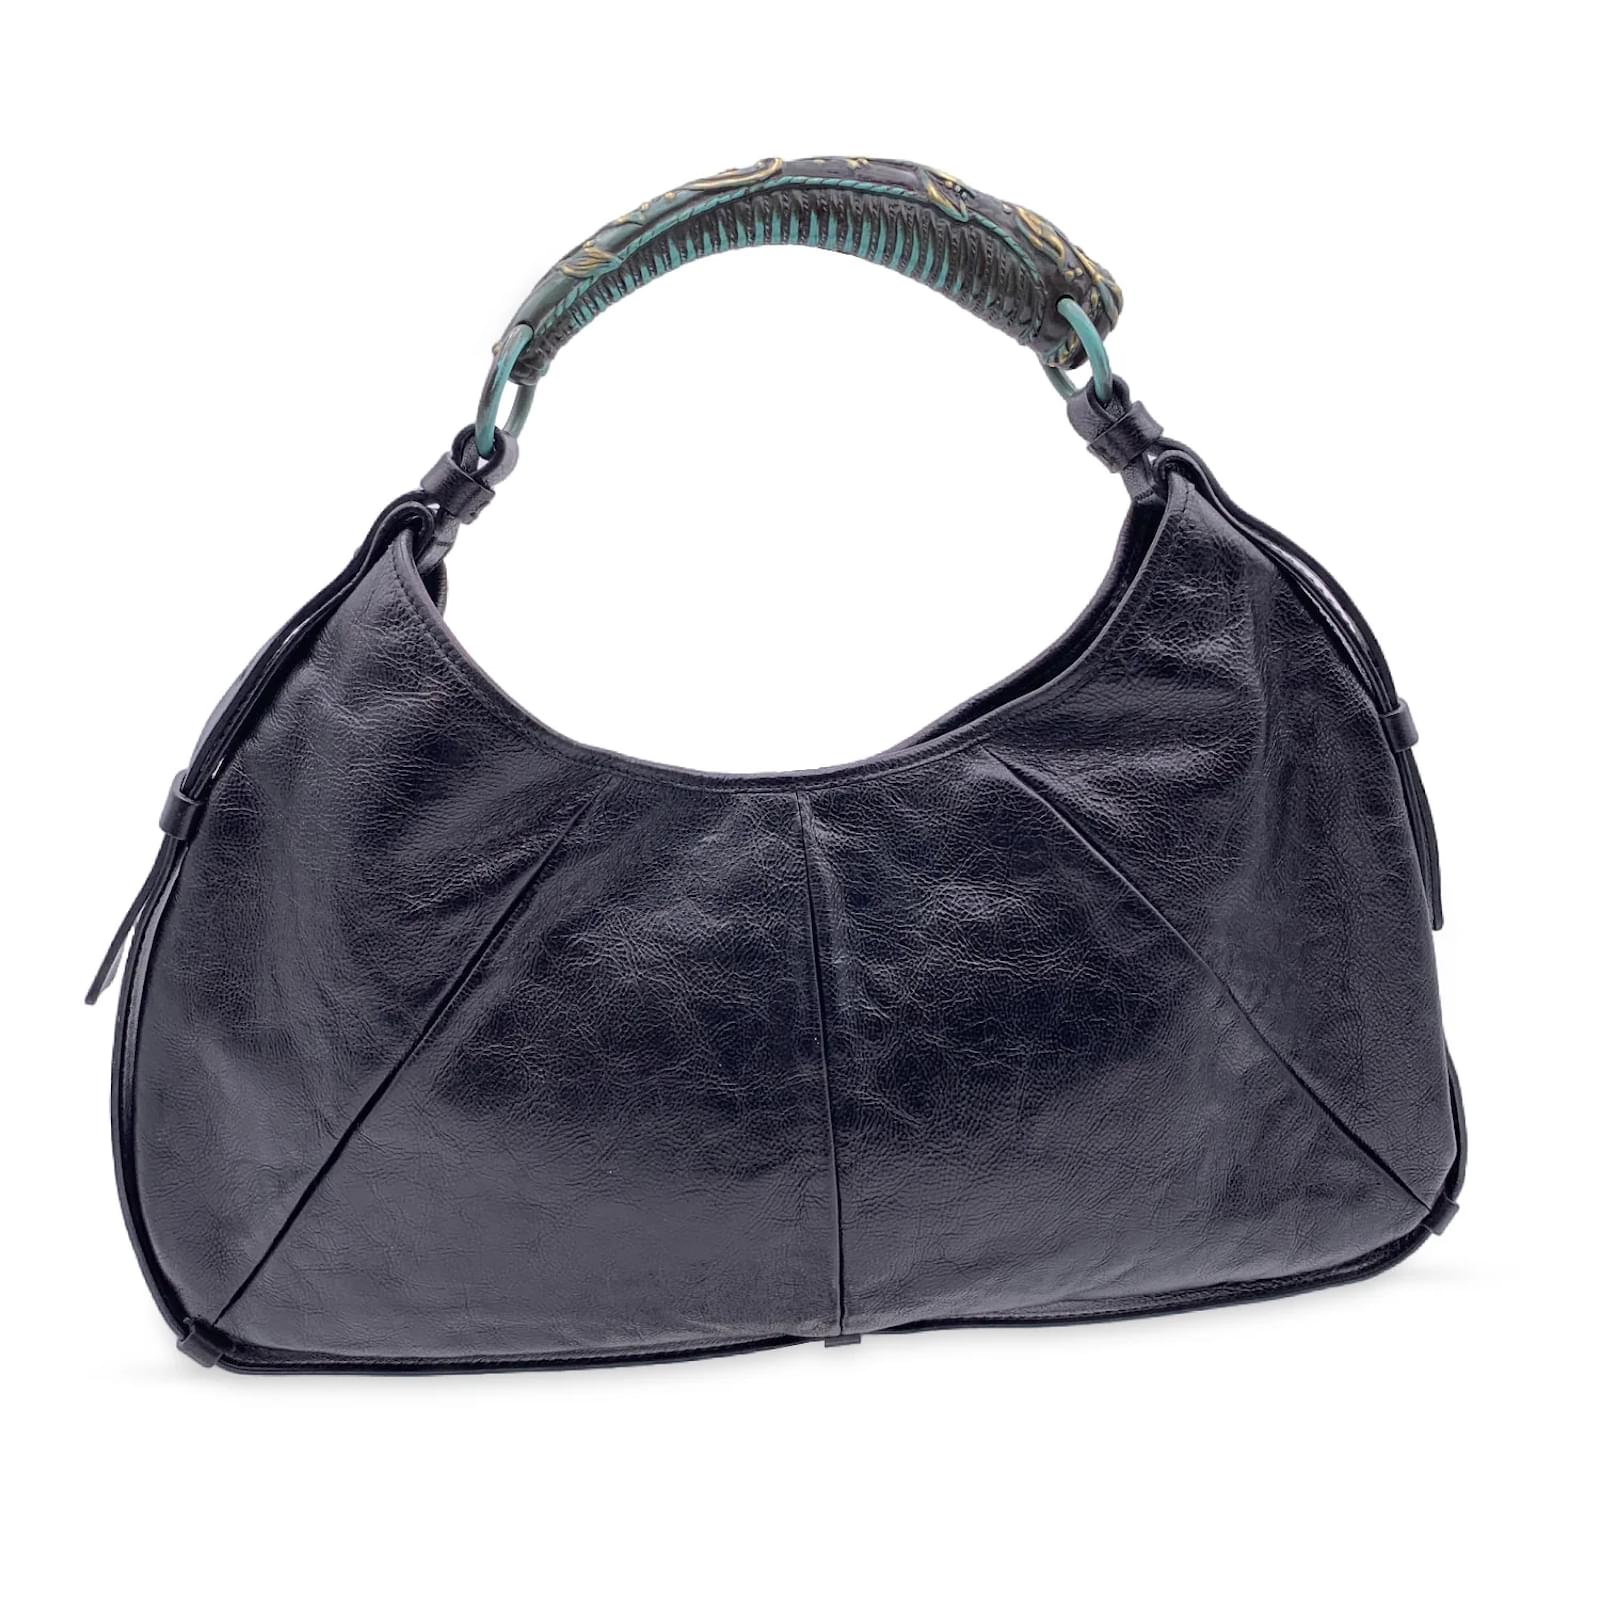 Yves Saint Laurent black suede bag with silver metal horn handle